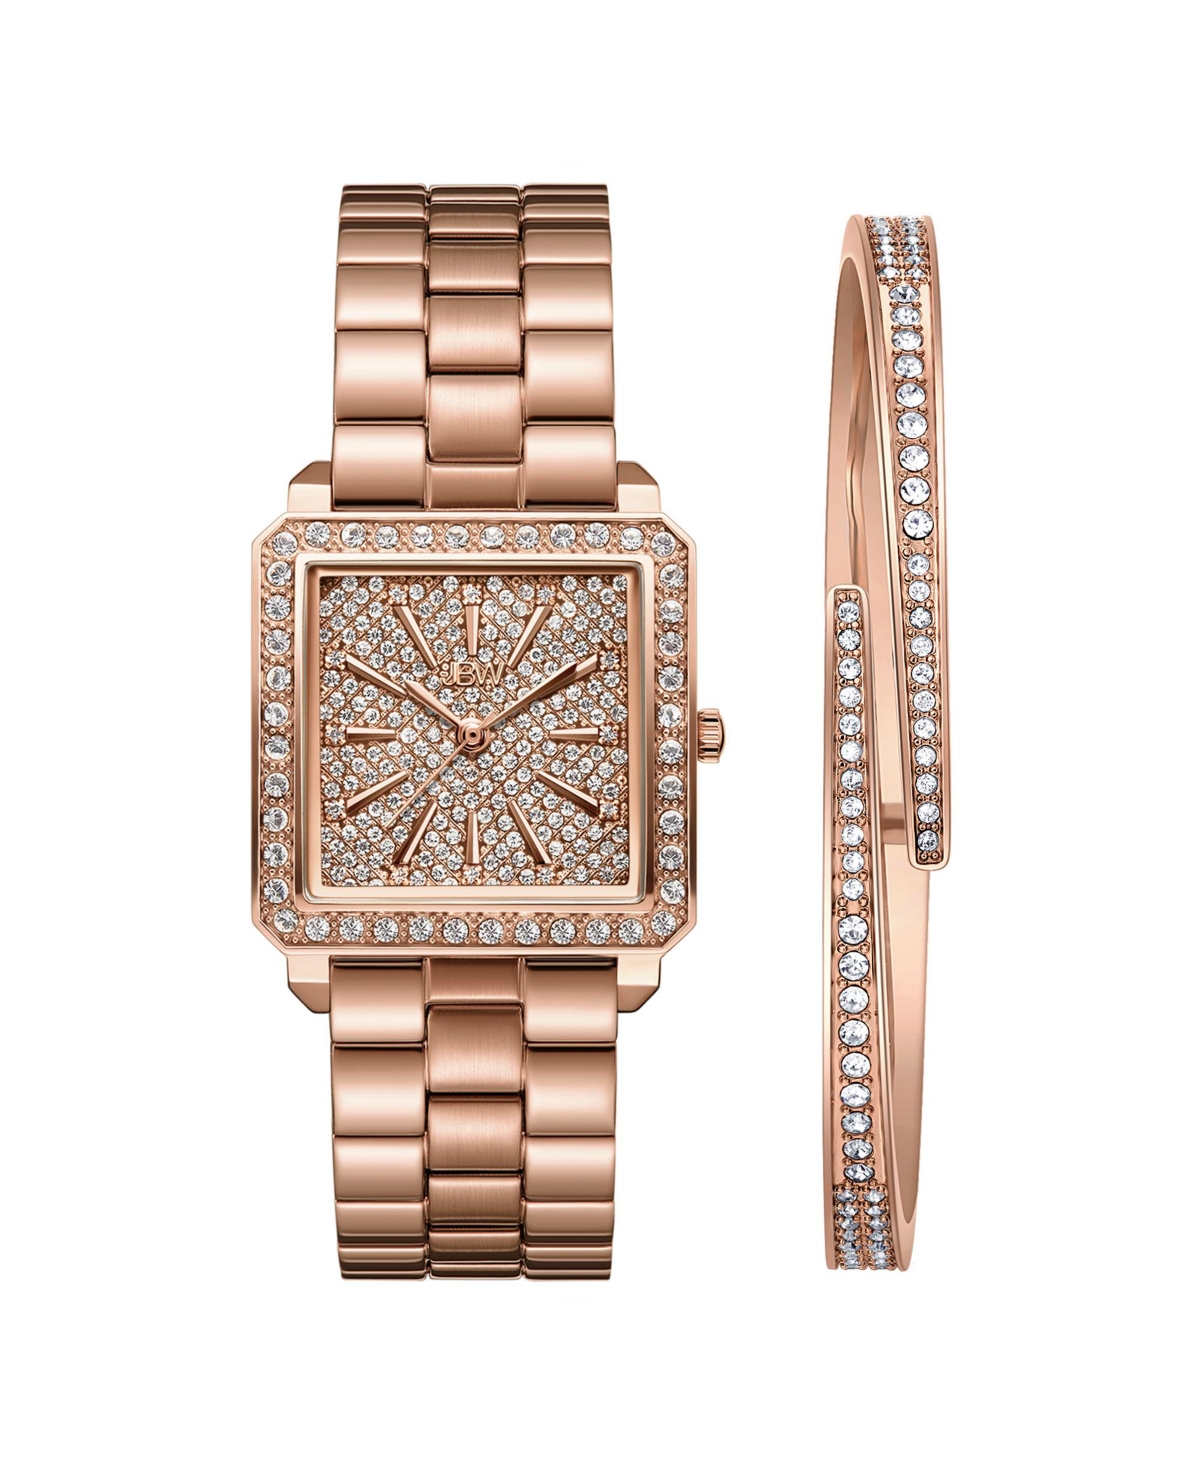 Women's Cristal Quartz 18K Rose Gold-Plated Stainless Steel Watch Set, 28mm - Rose Gold